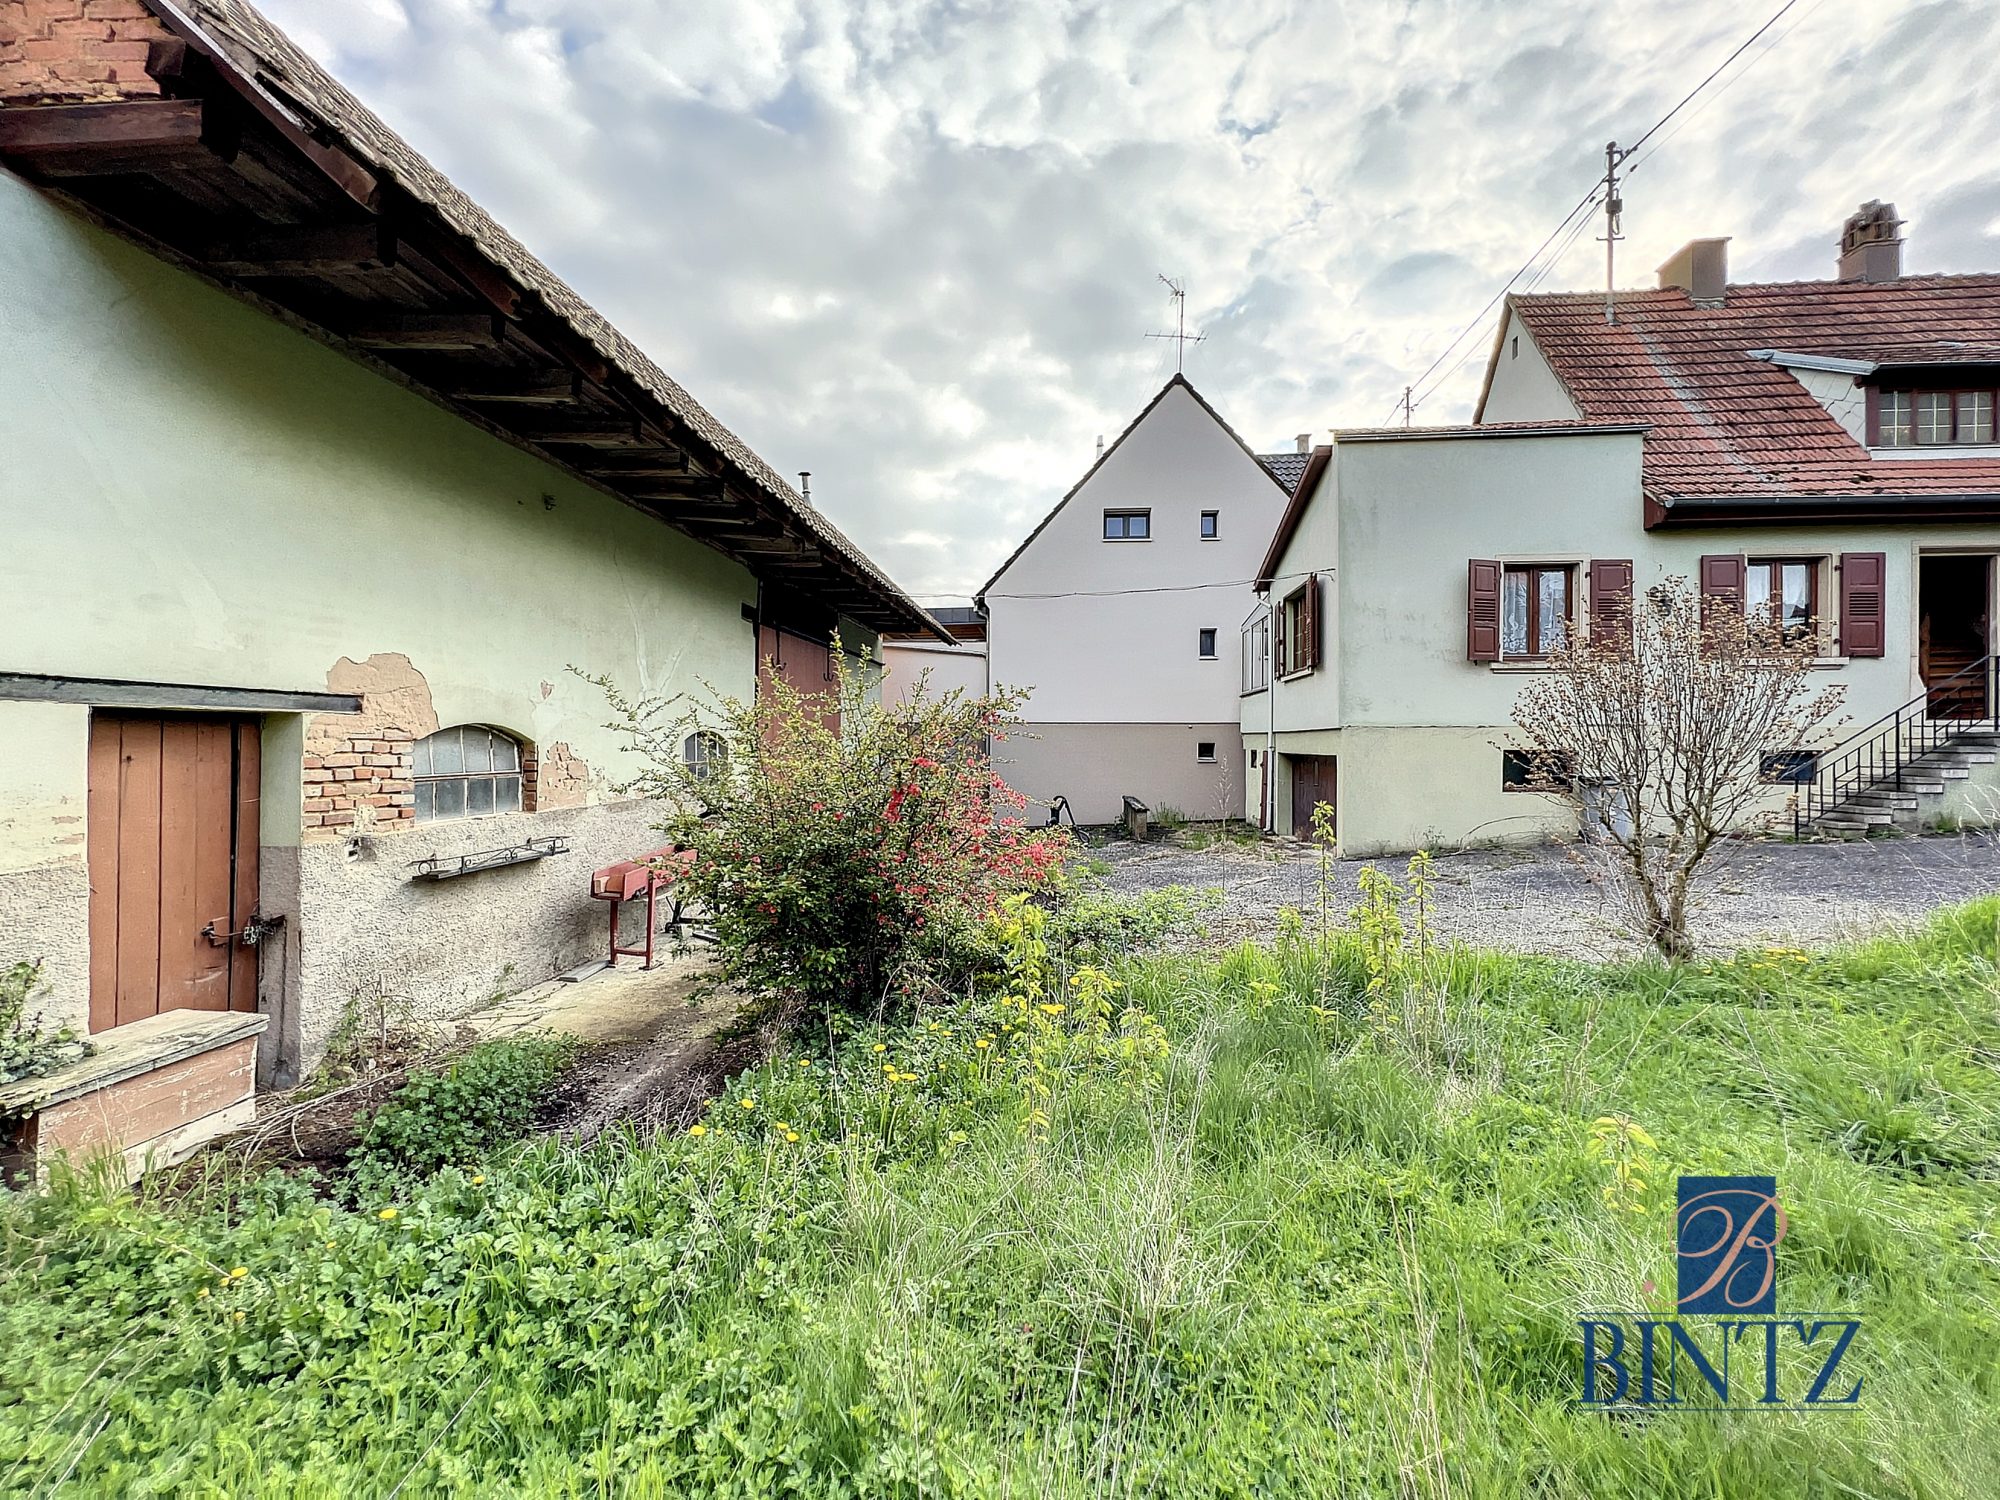 Maison grange & terrain - maison à vendre Strasbourg - Bintz Immobilier - 3